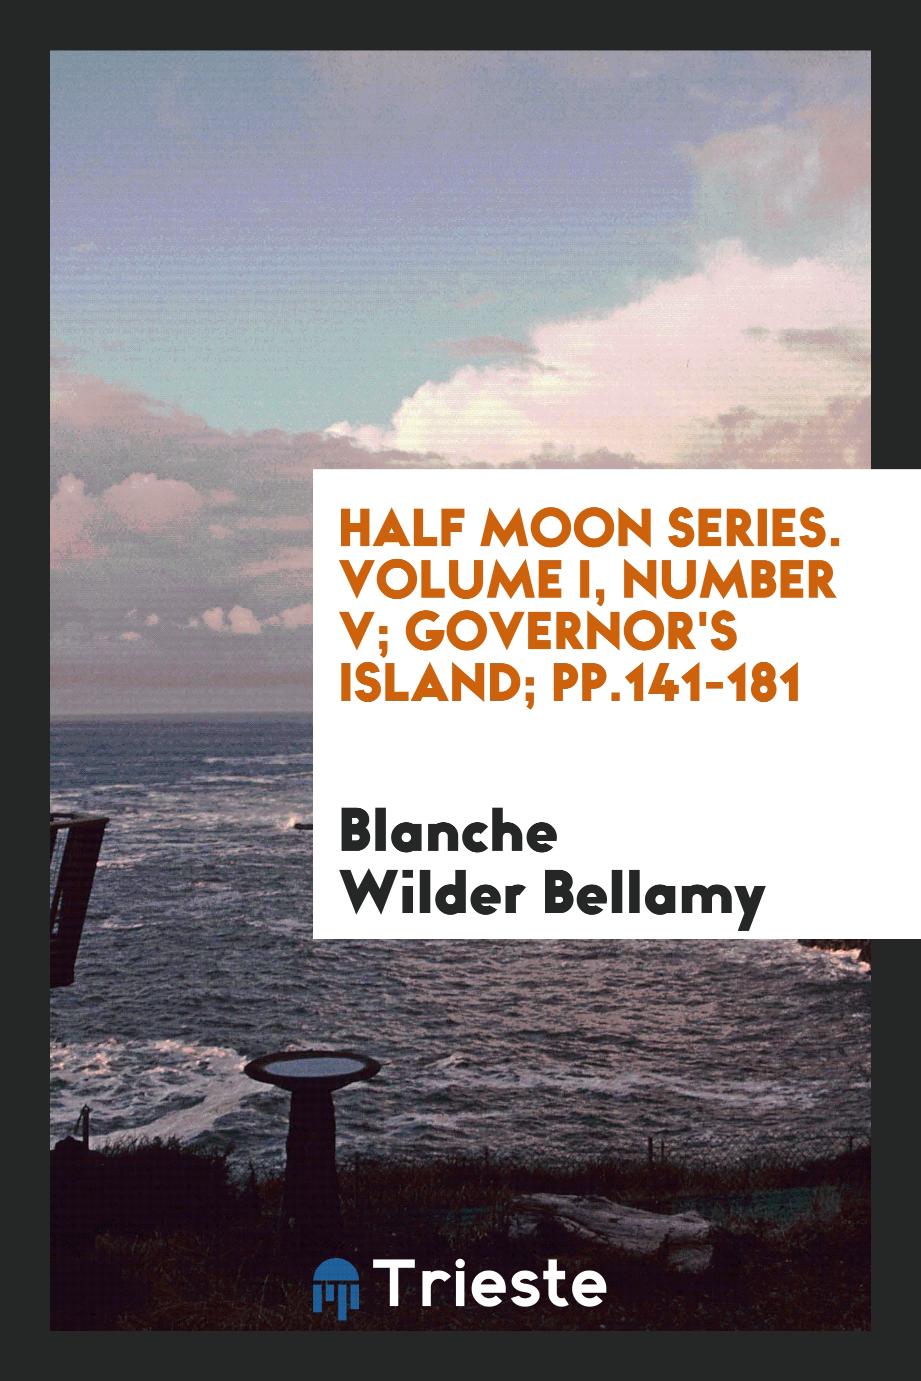 Half Moon Series. Volume I, Number V; Governor's Island; pp.141-181